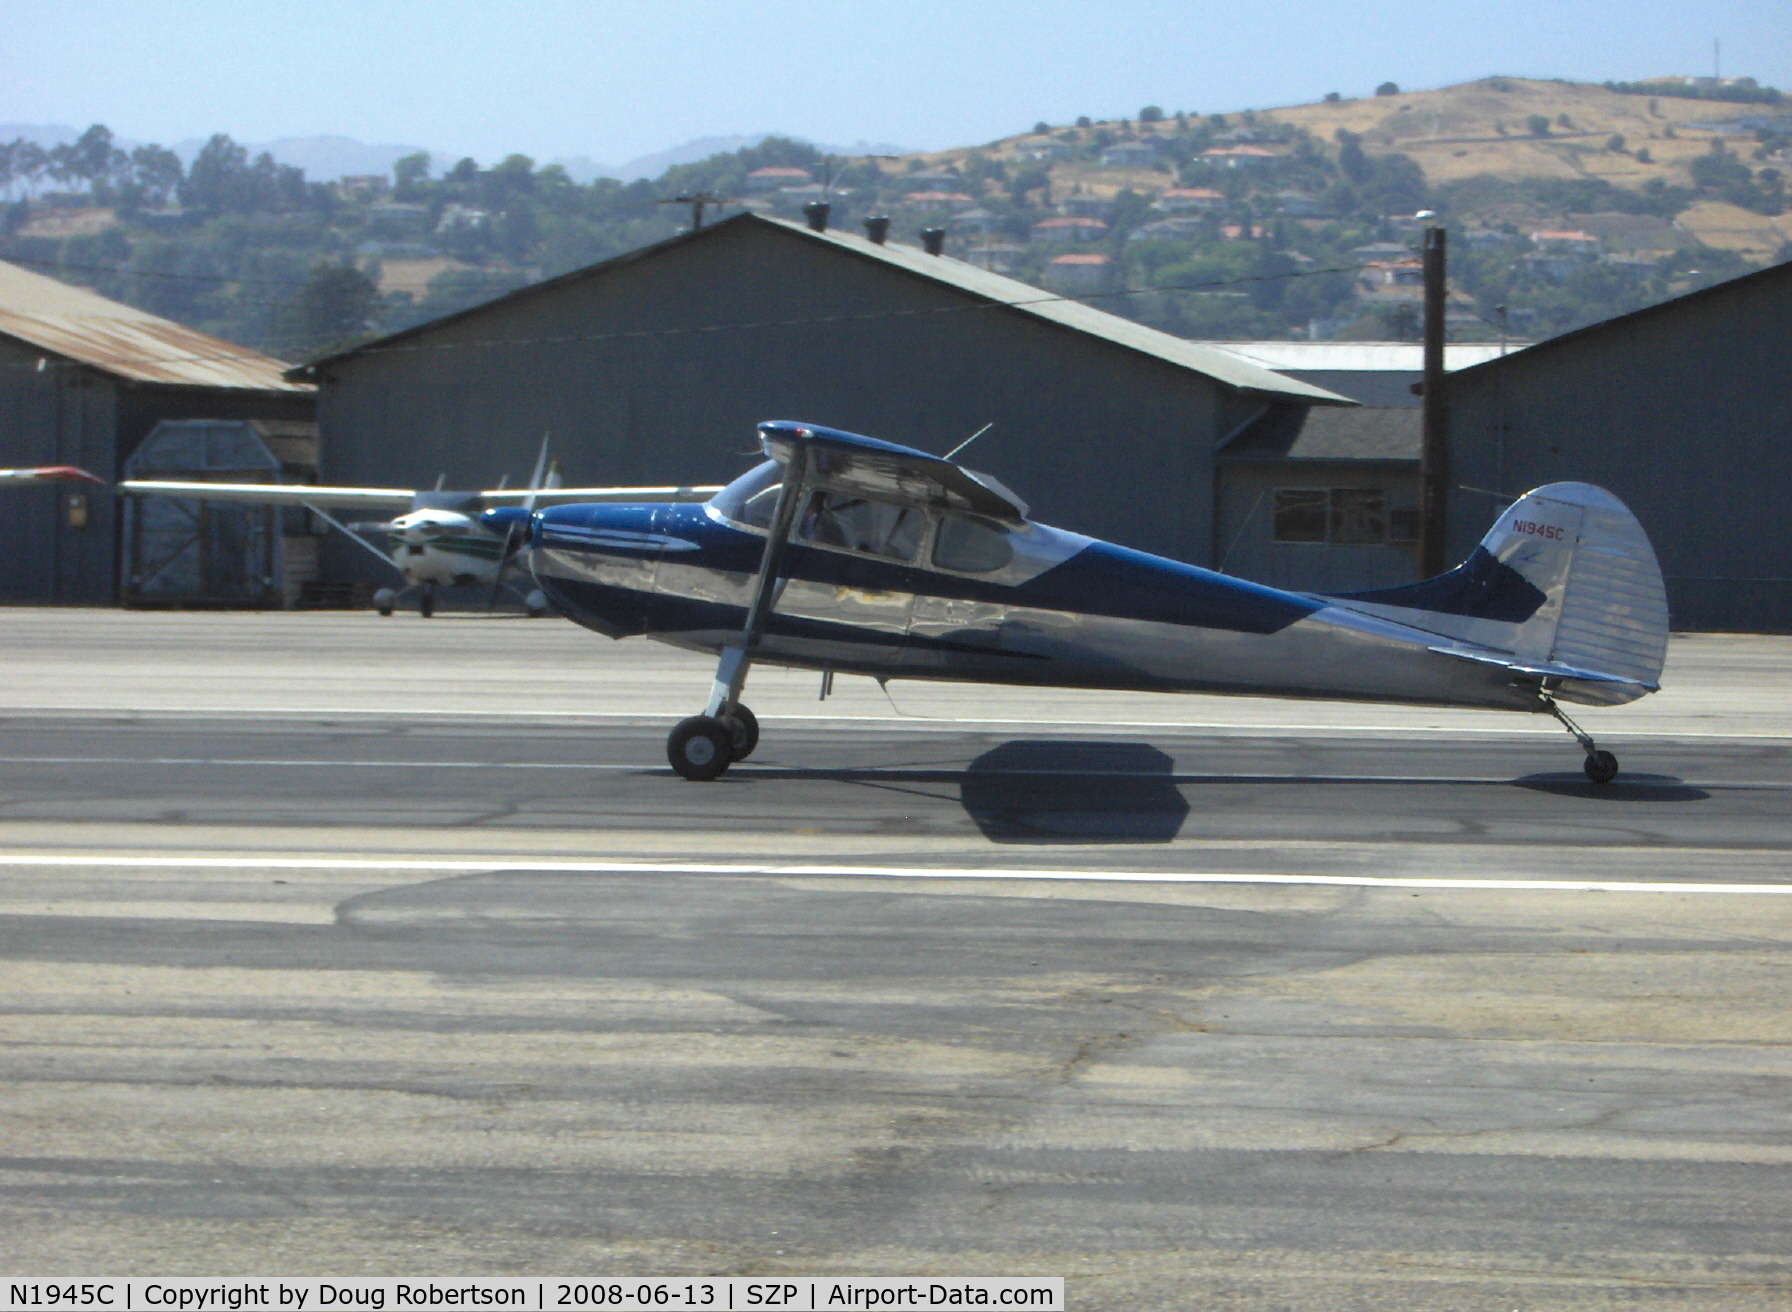 N1945C, 1953 Cessna 170B C/N 26090, 1953 Cessna 170B, Continental C145 145 Hp, takeoff roll Rwy 22